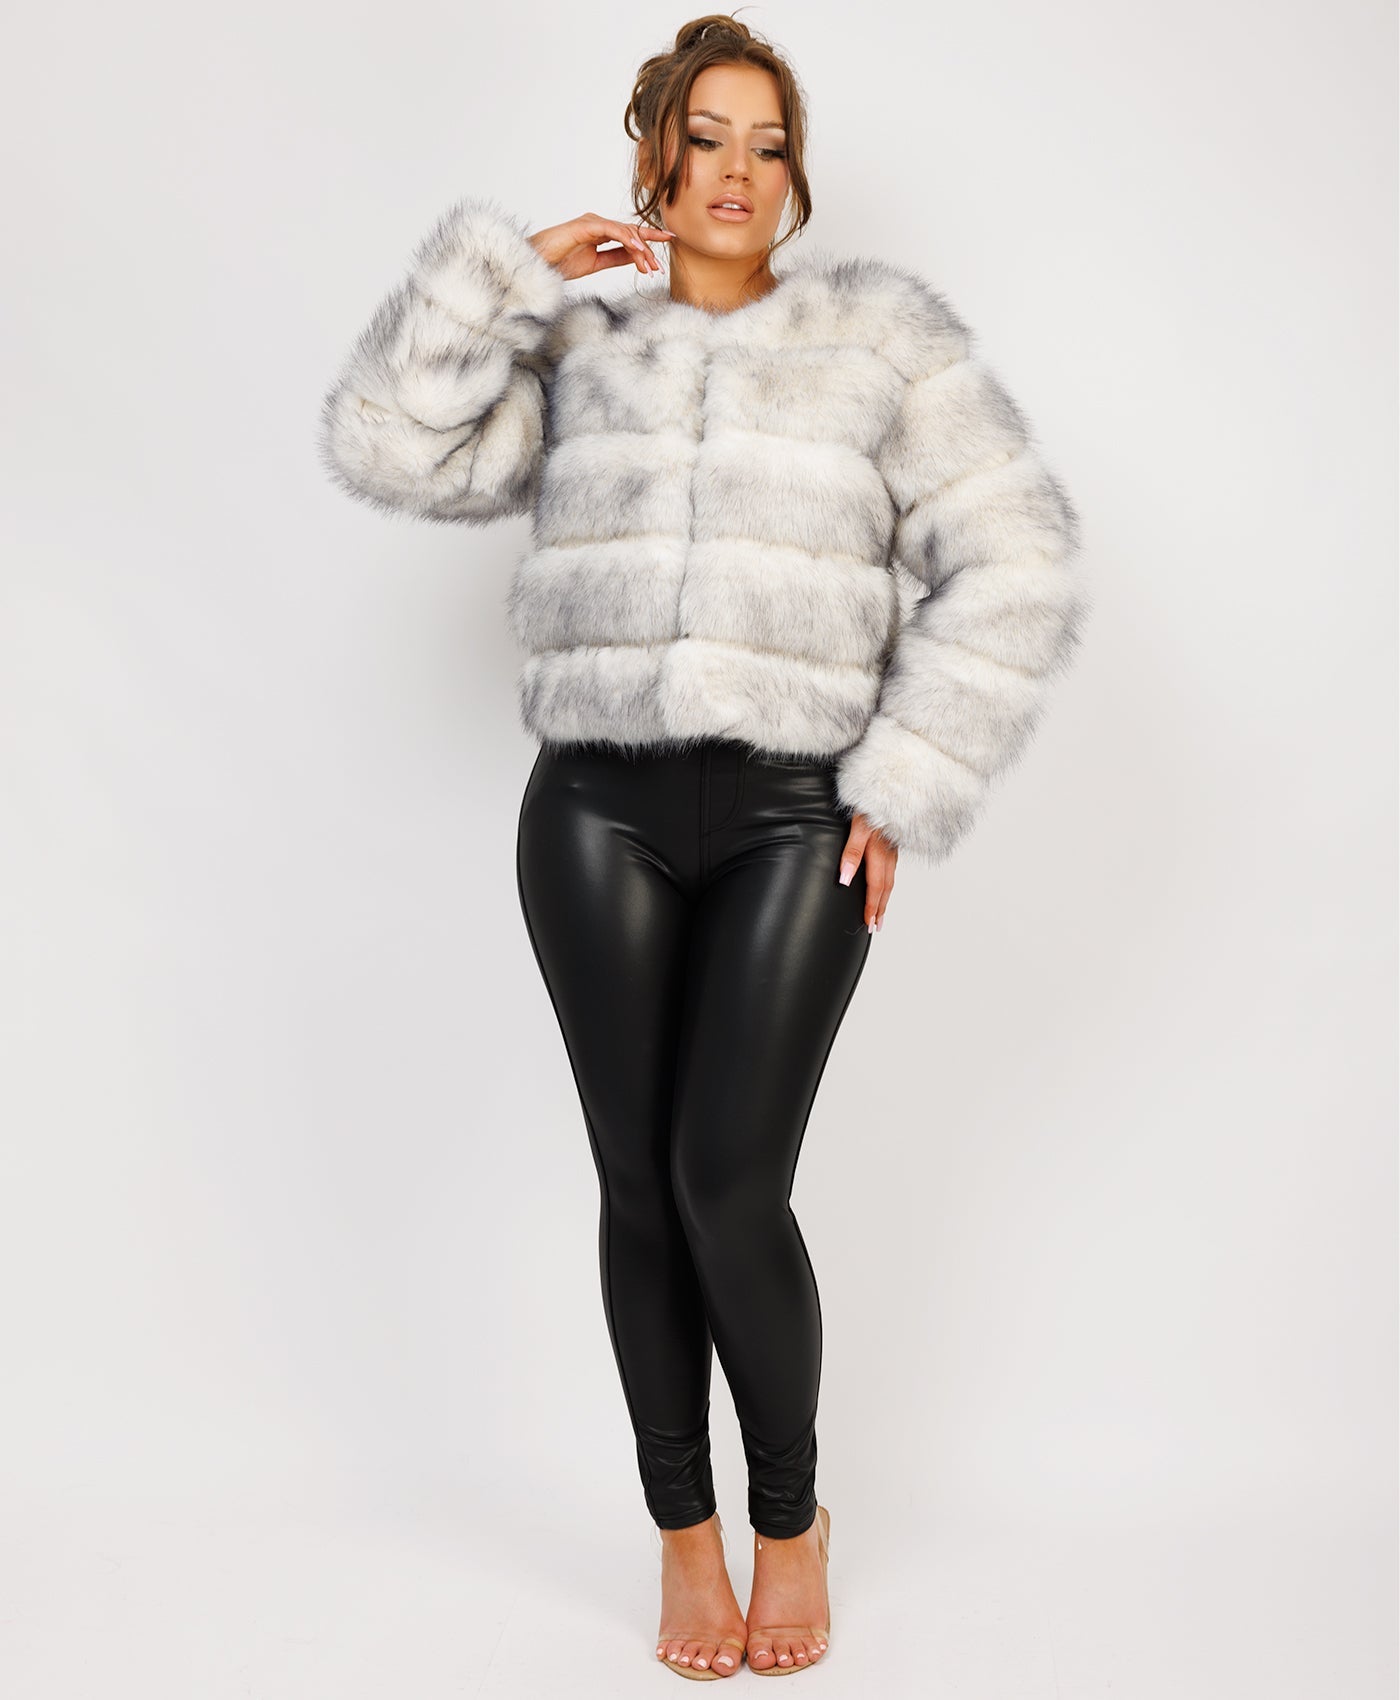 Snow-White-Premium-Faux-Fur-Tiered-Jacket-Coat-5